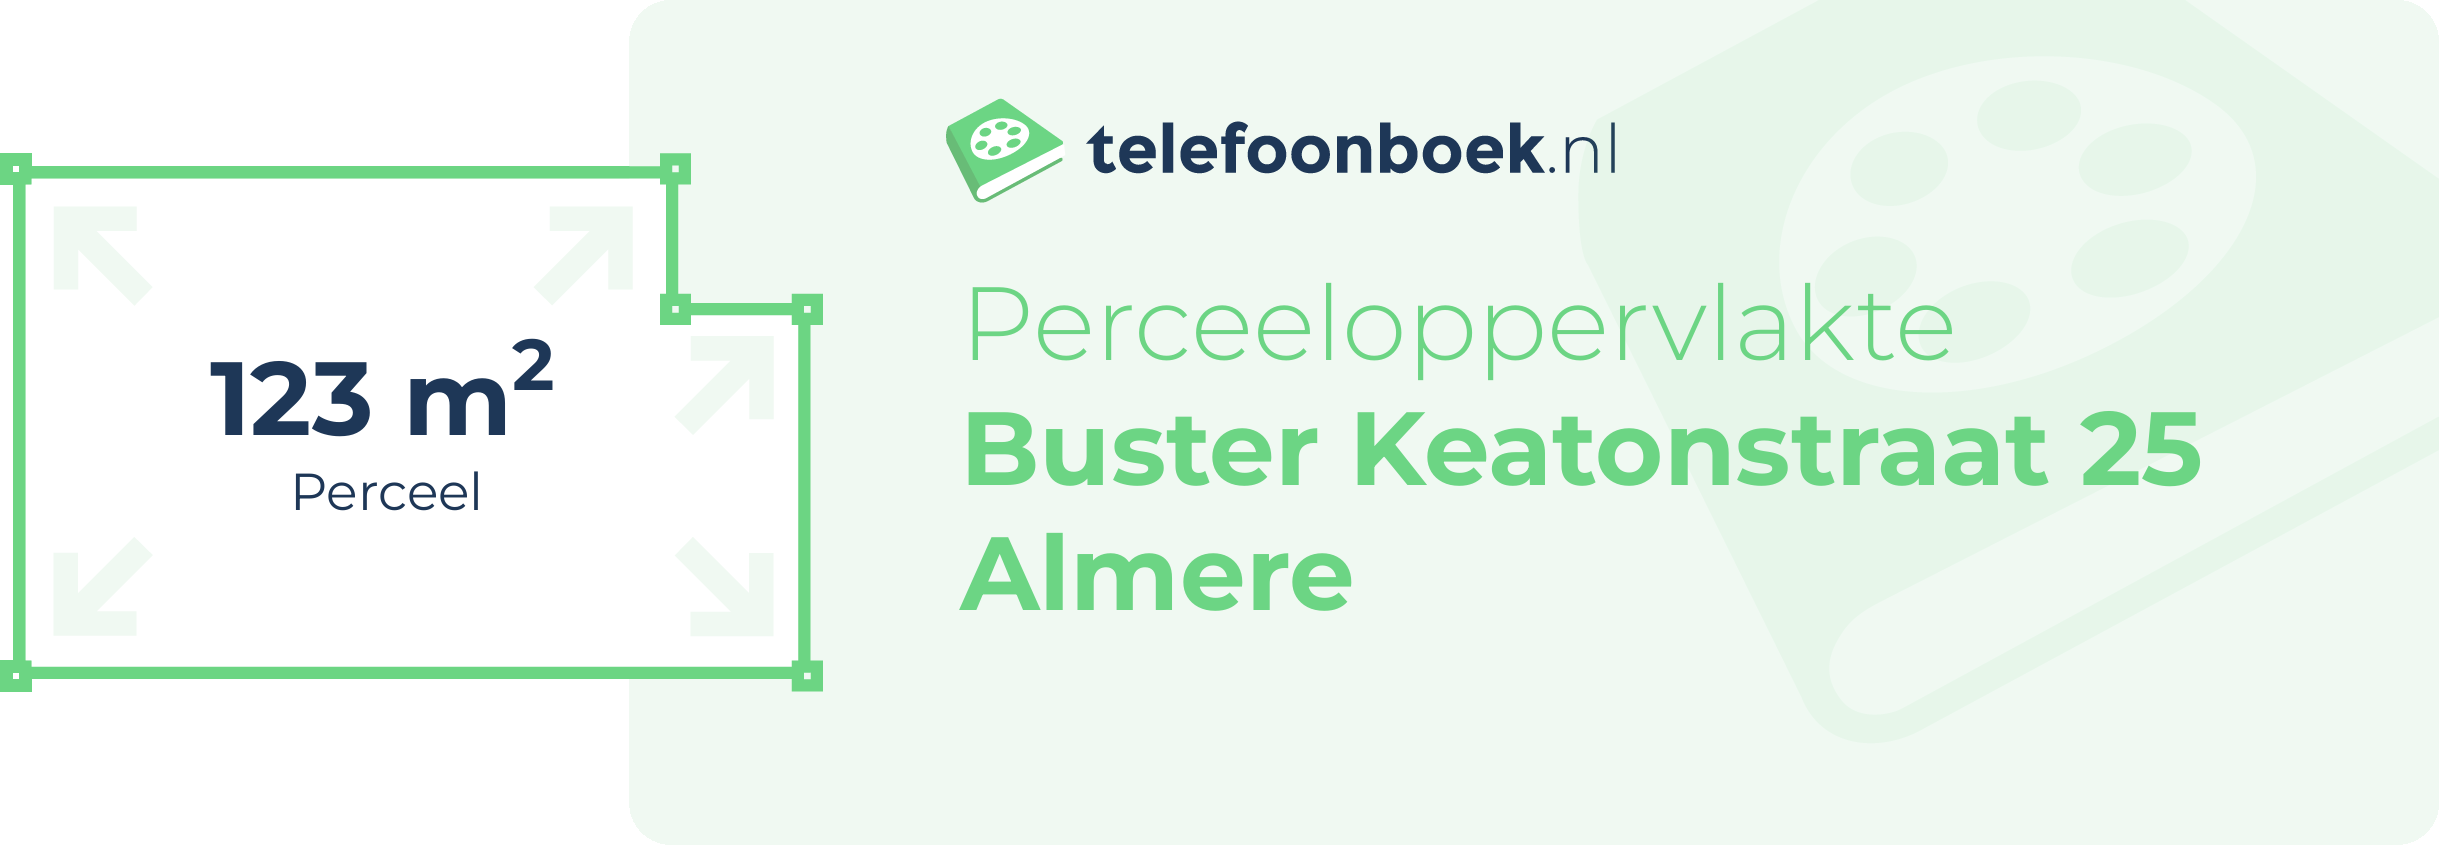 Perceeloppervlakte Buster Keatonstraat 25 Almere